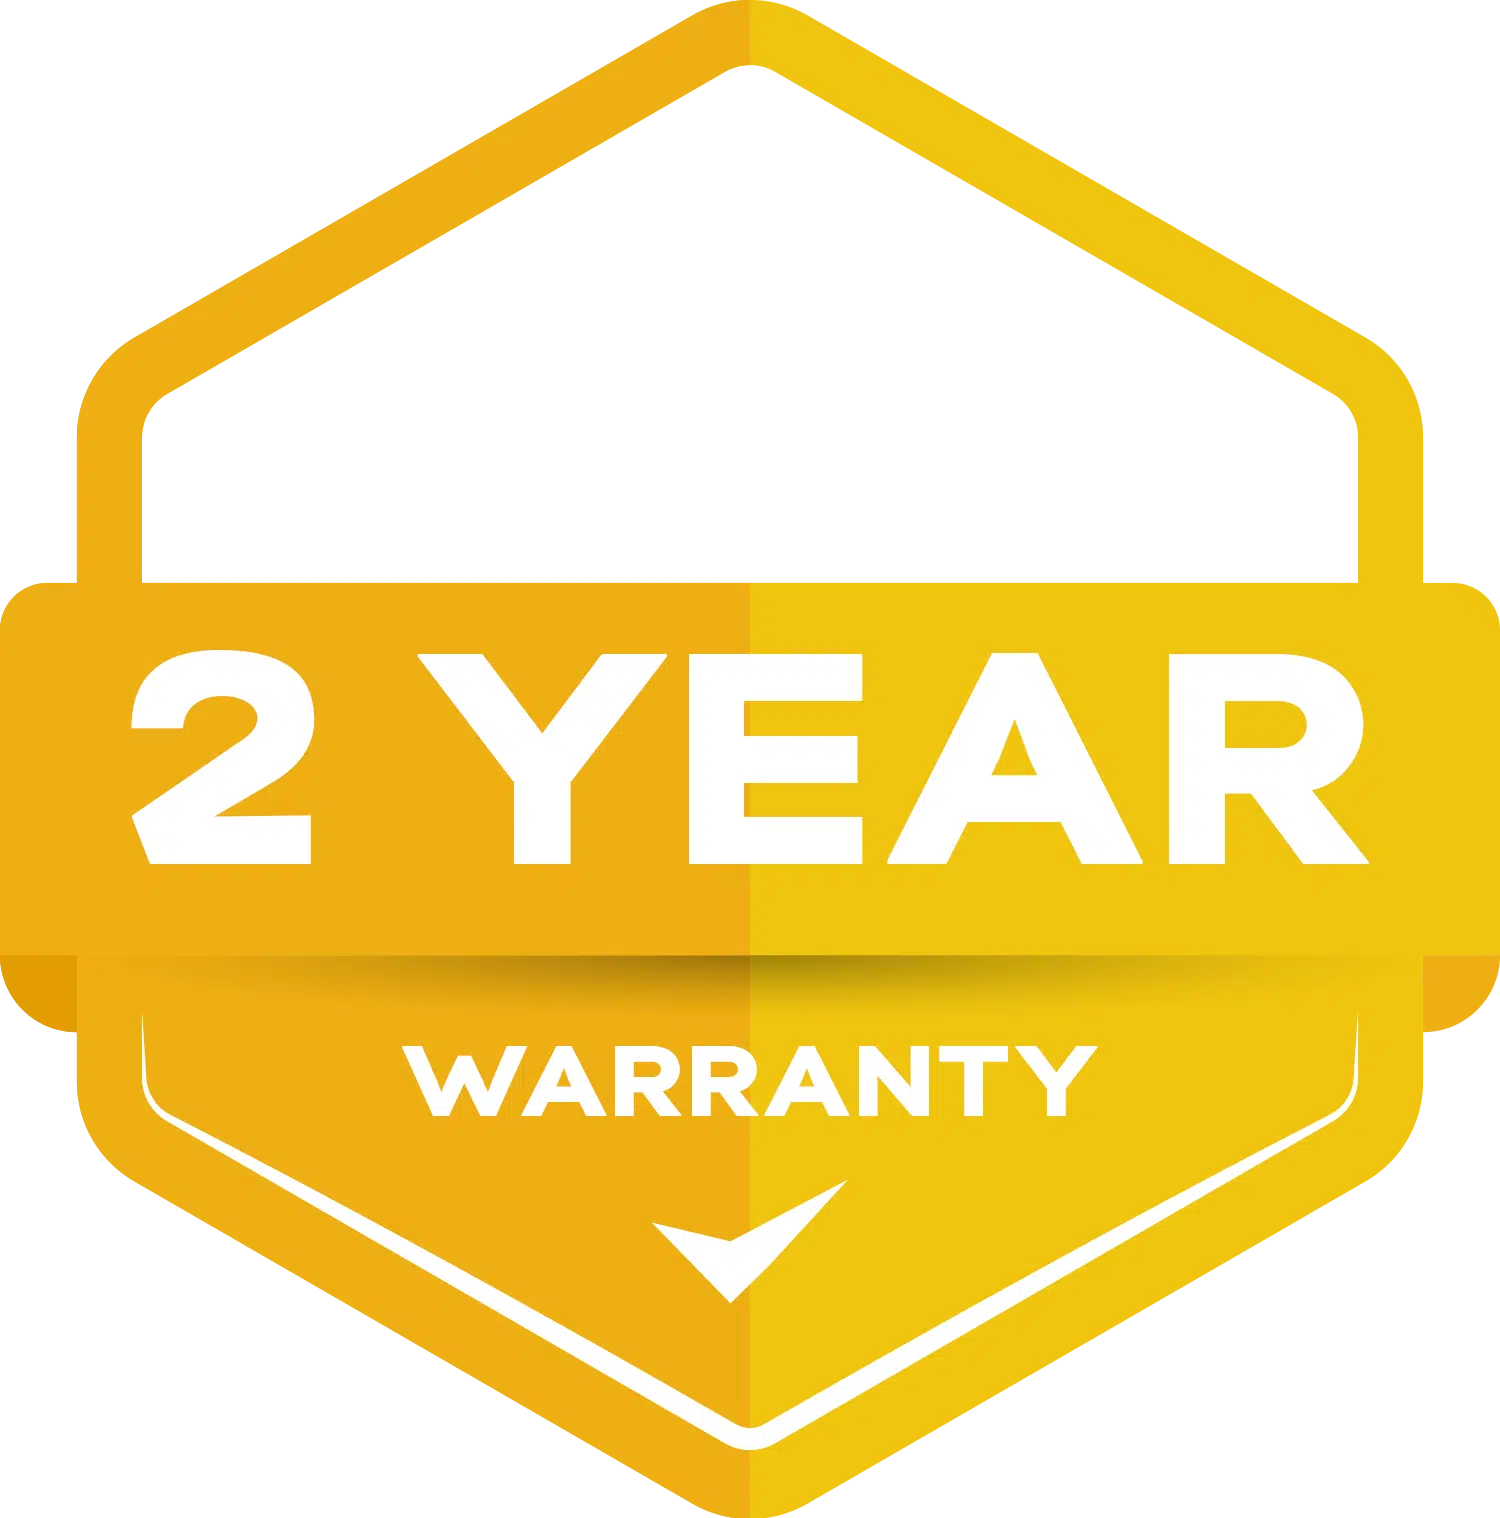 Extended Warranty 2 year